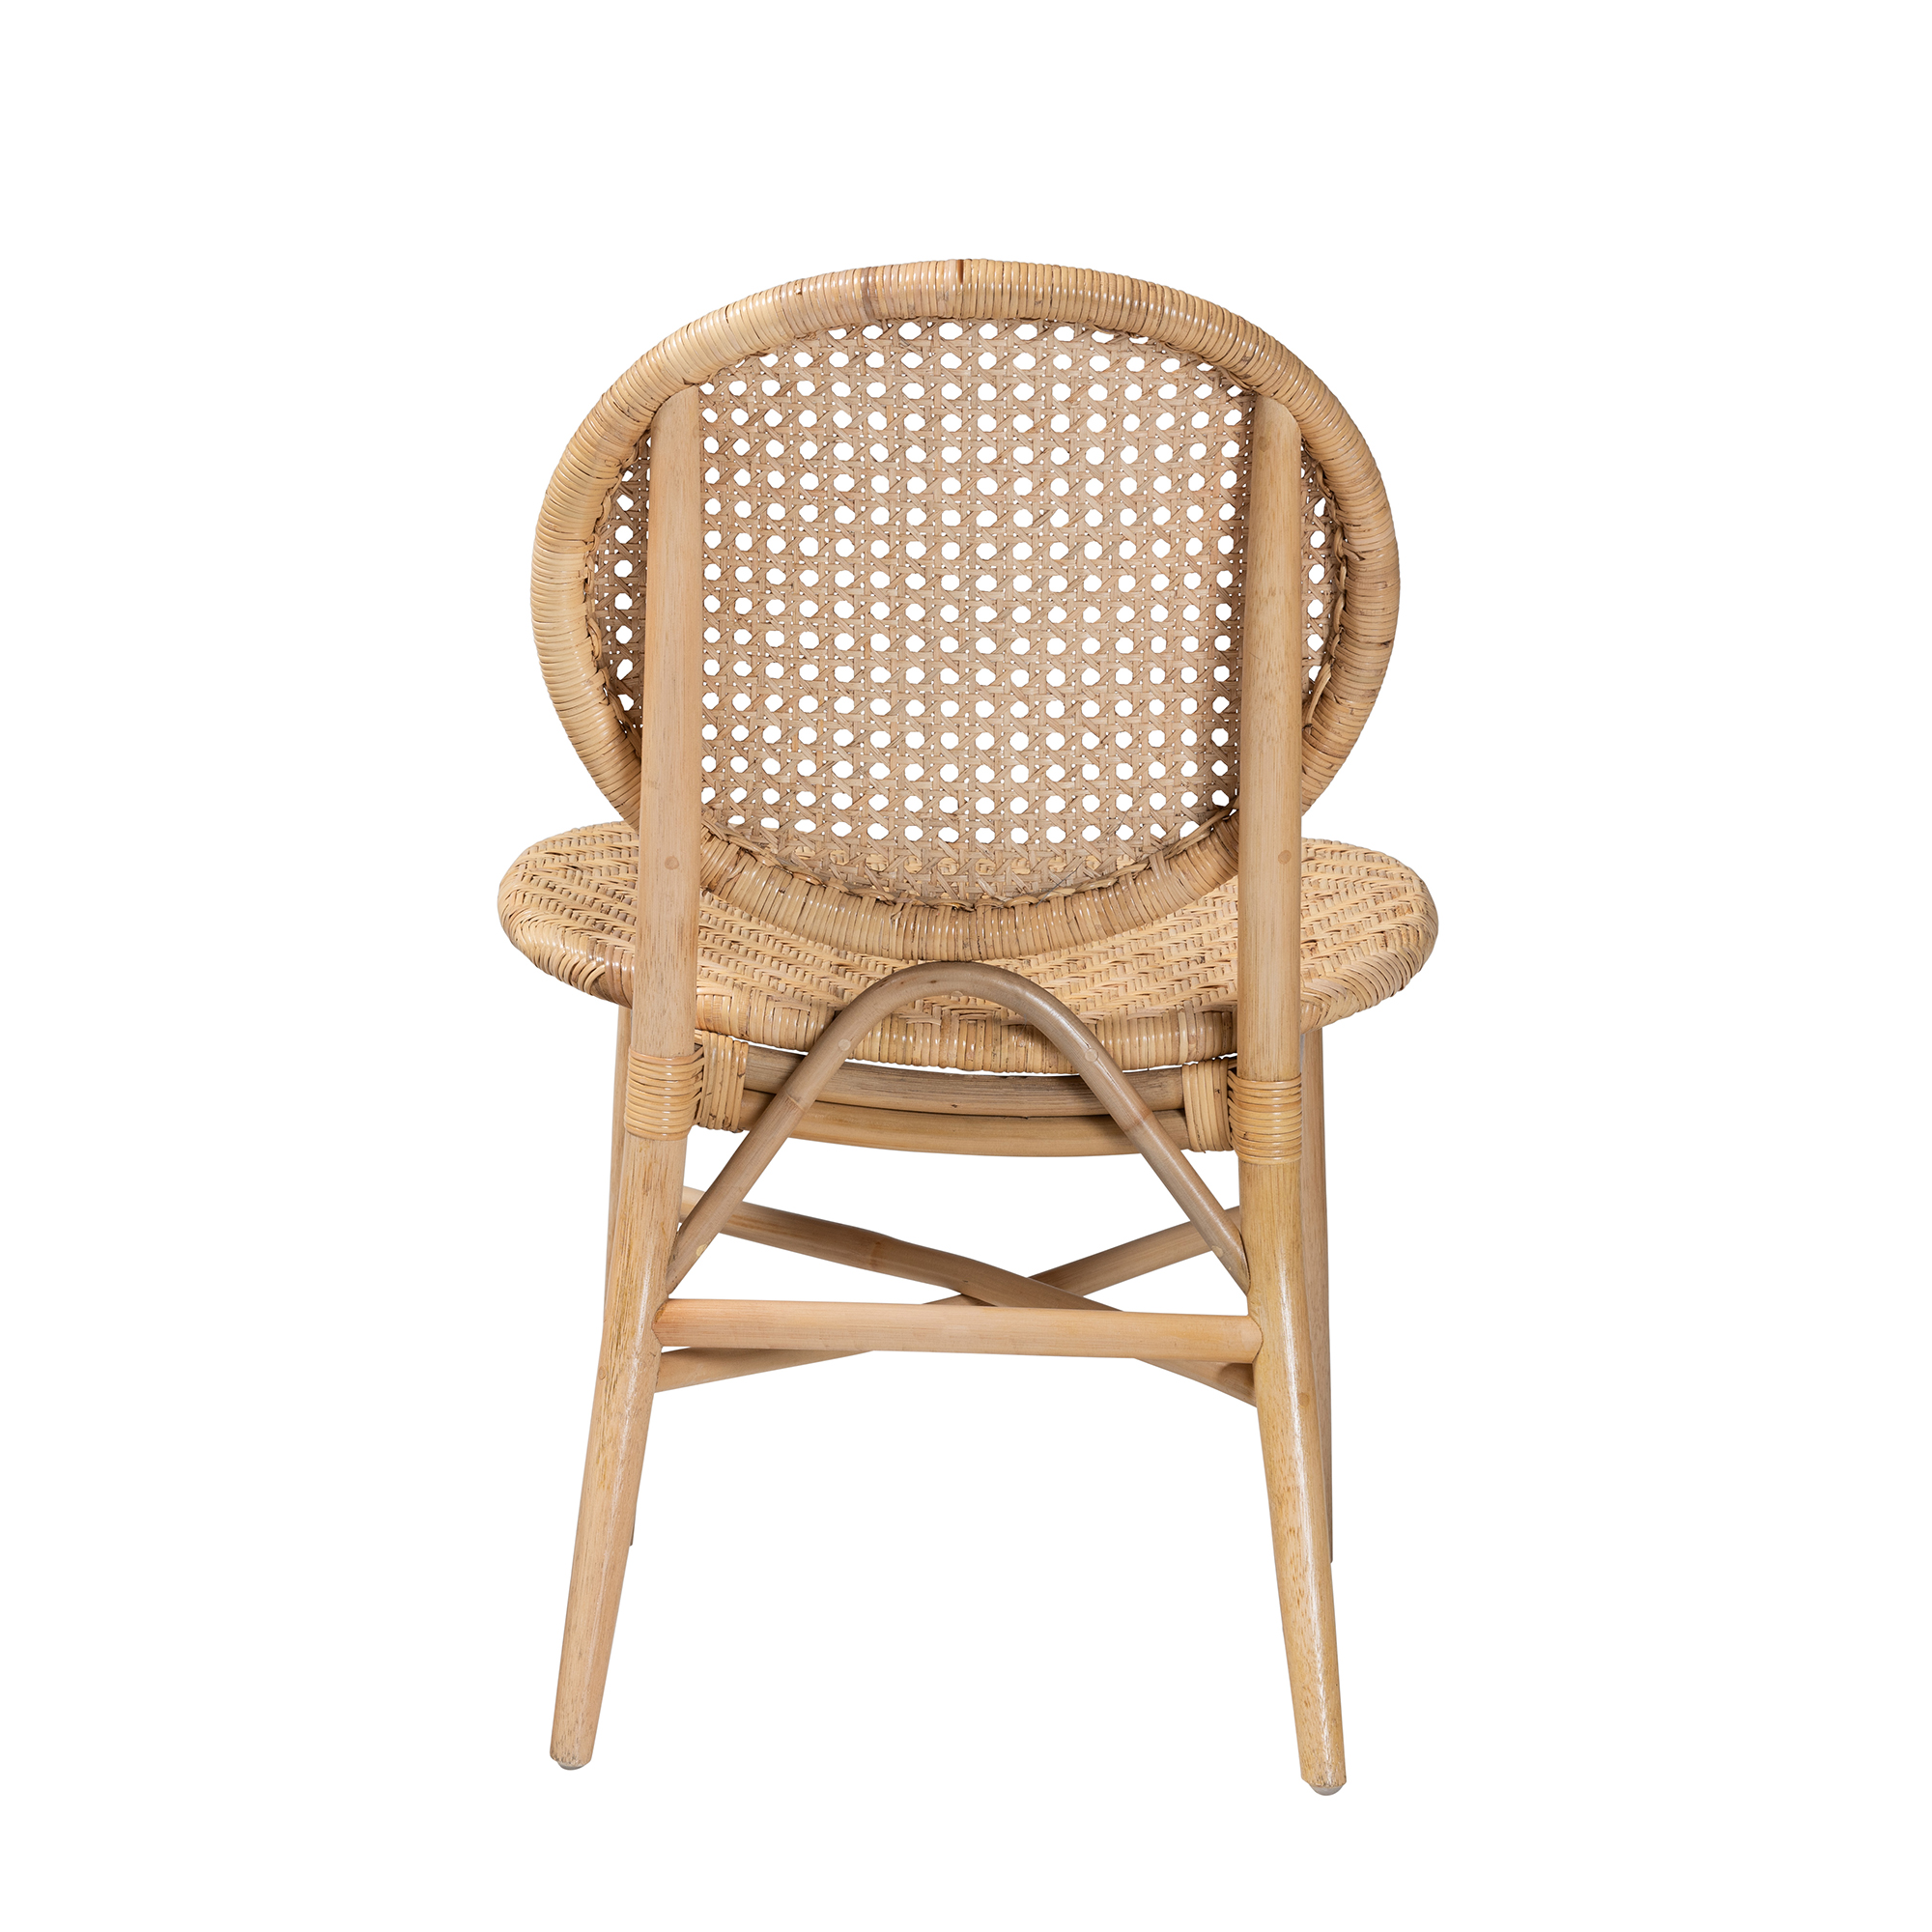 bali & pari Osaka Rattan BOHO Dining Chair, Natural Brown - image 5 of 9